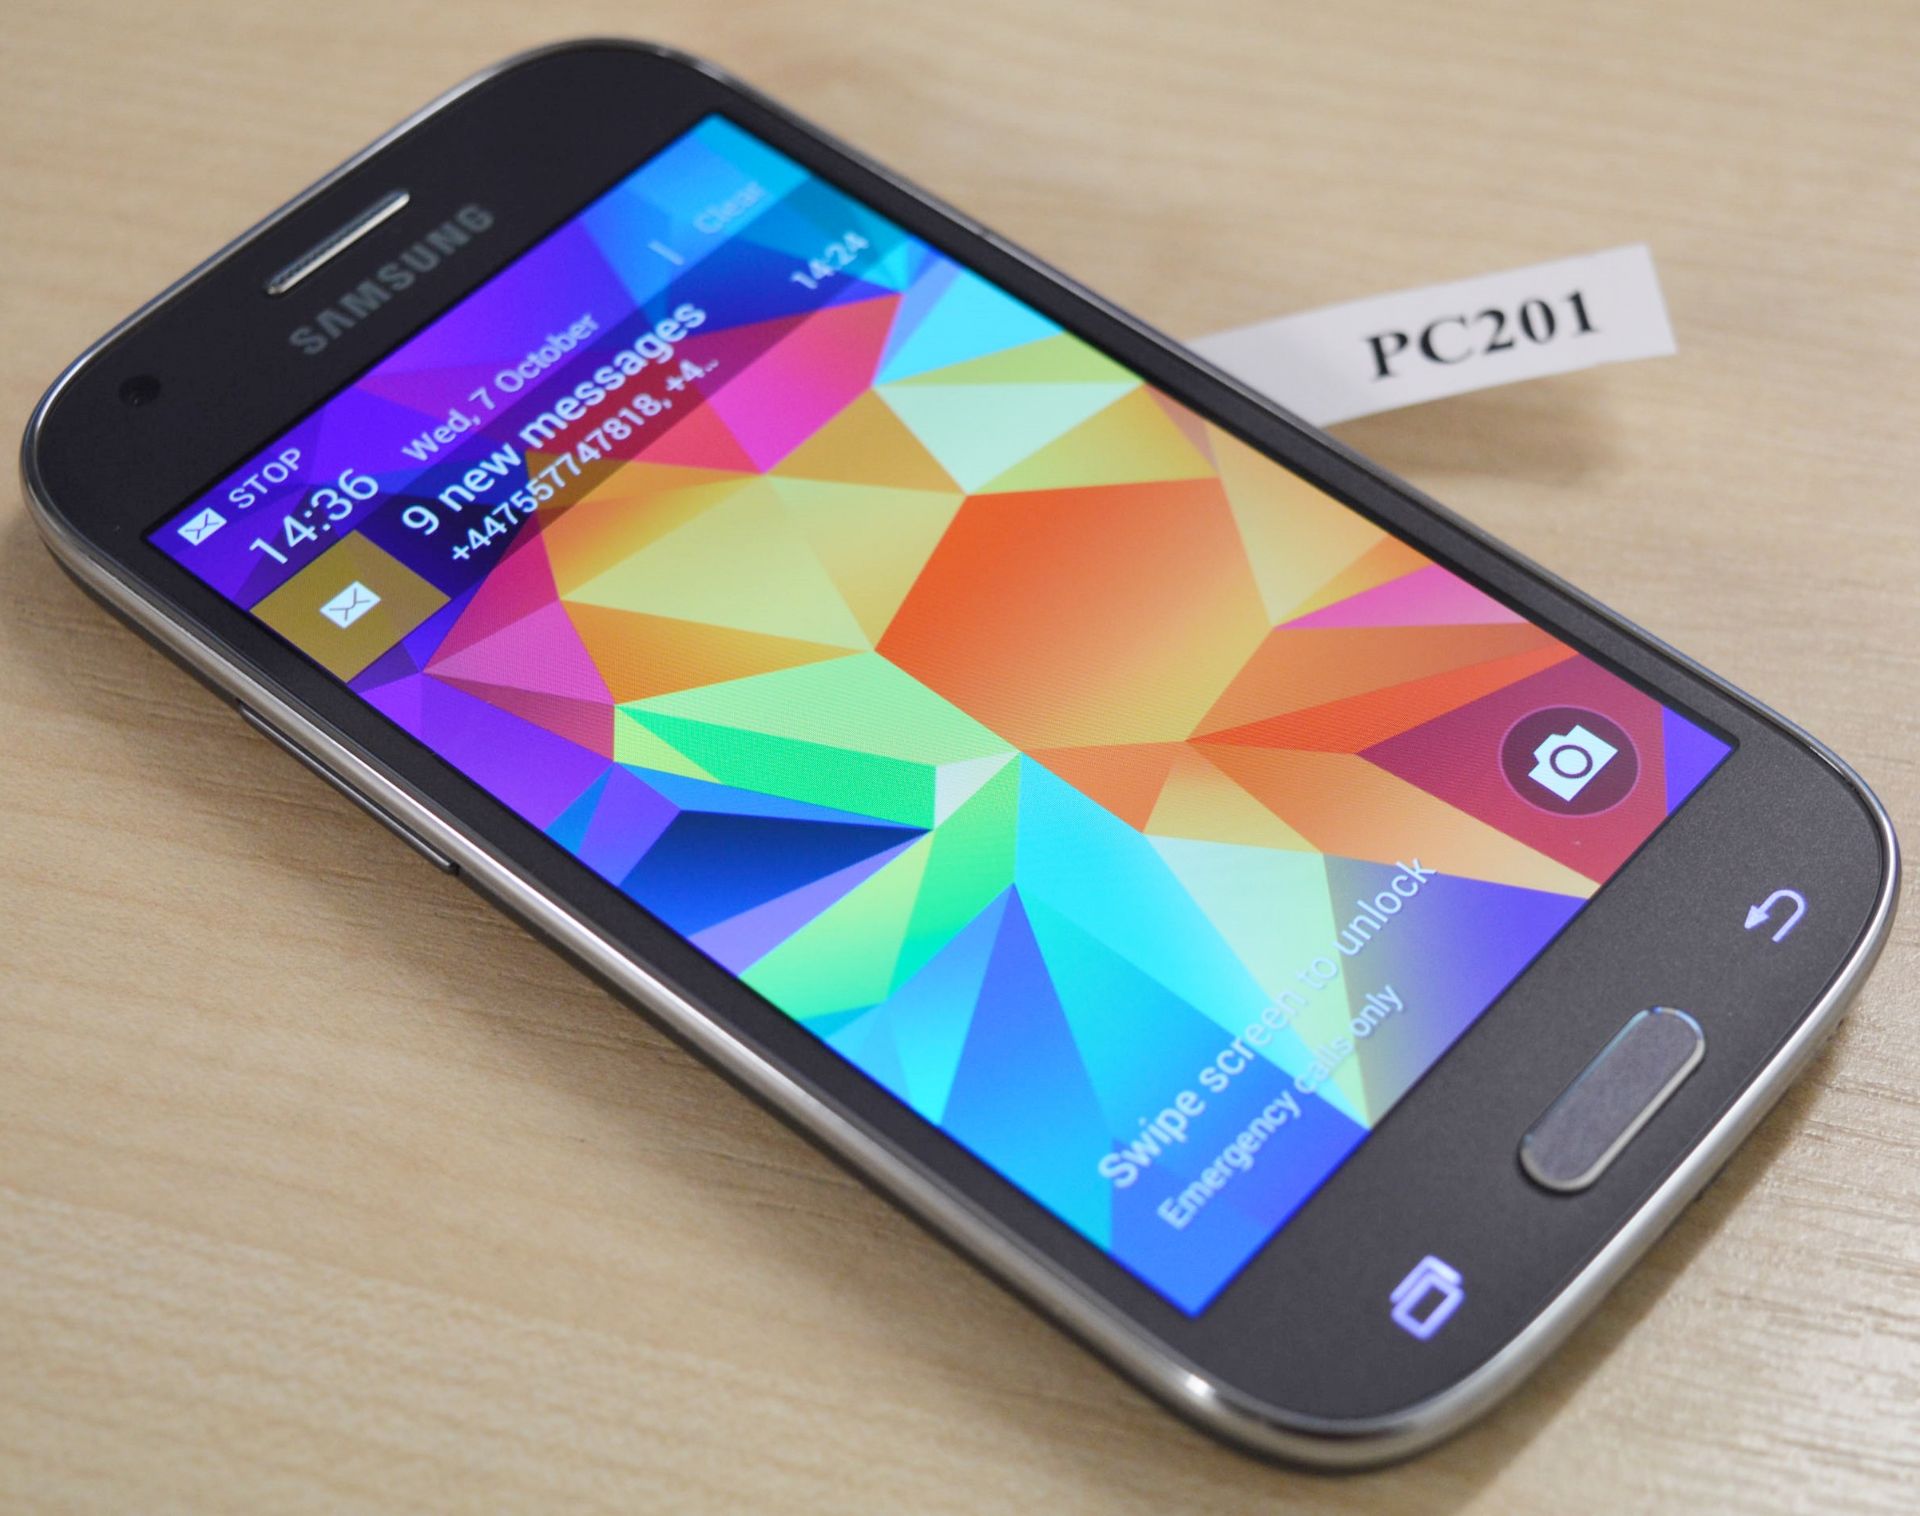 1 x Samsung Galaxy Ace 4 Mobile Phone - SM-G357FZ - Features Quad Core 1.2ghz Processor, 1gb